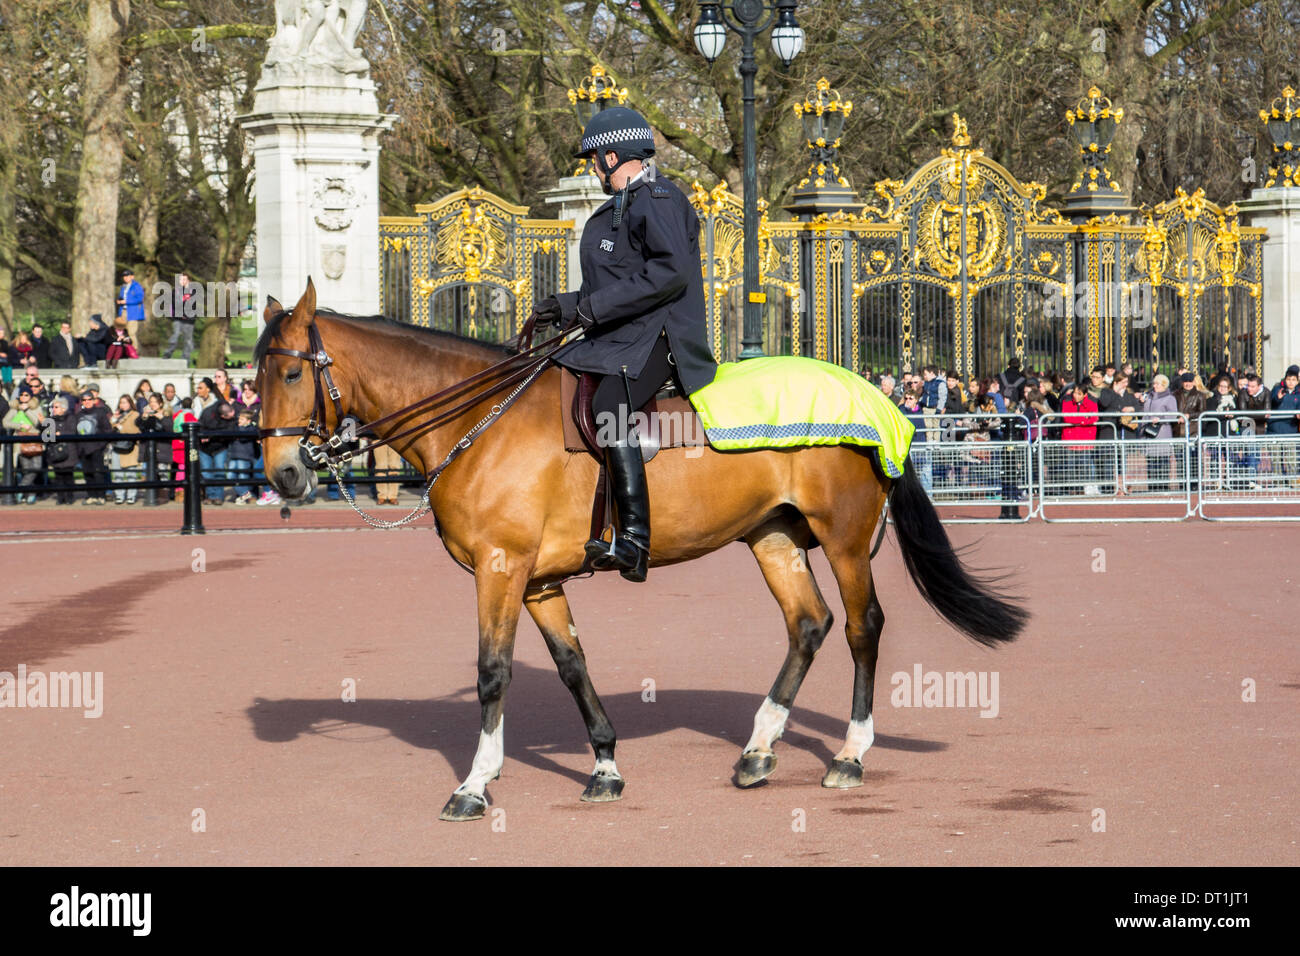 LONDON, UK, 2ND FEB 2014: A Police Man on horseback outside Buckingham Palace keeping an eye on the crowds of people Stock Photo